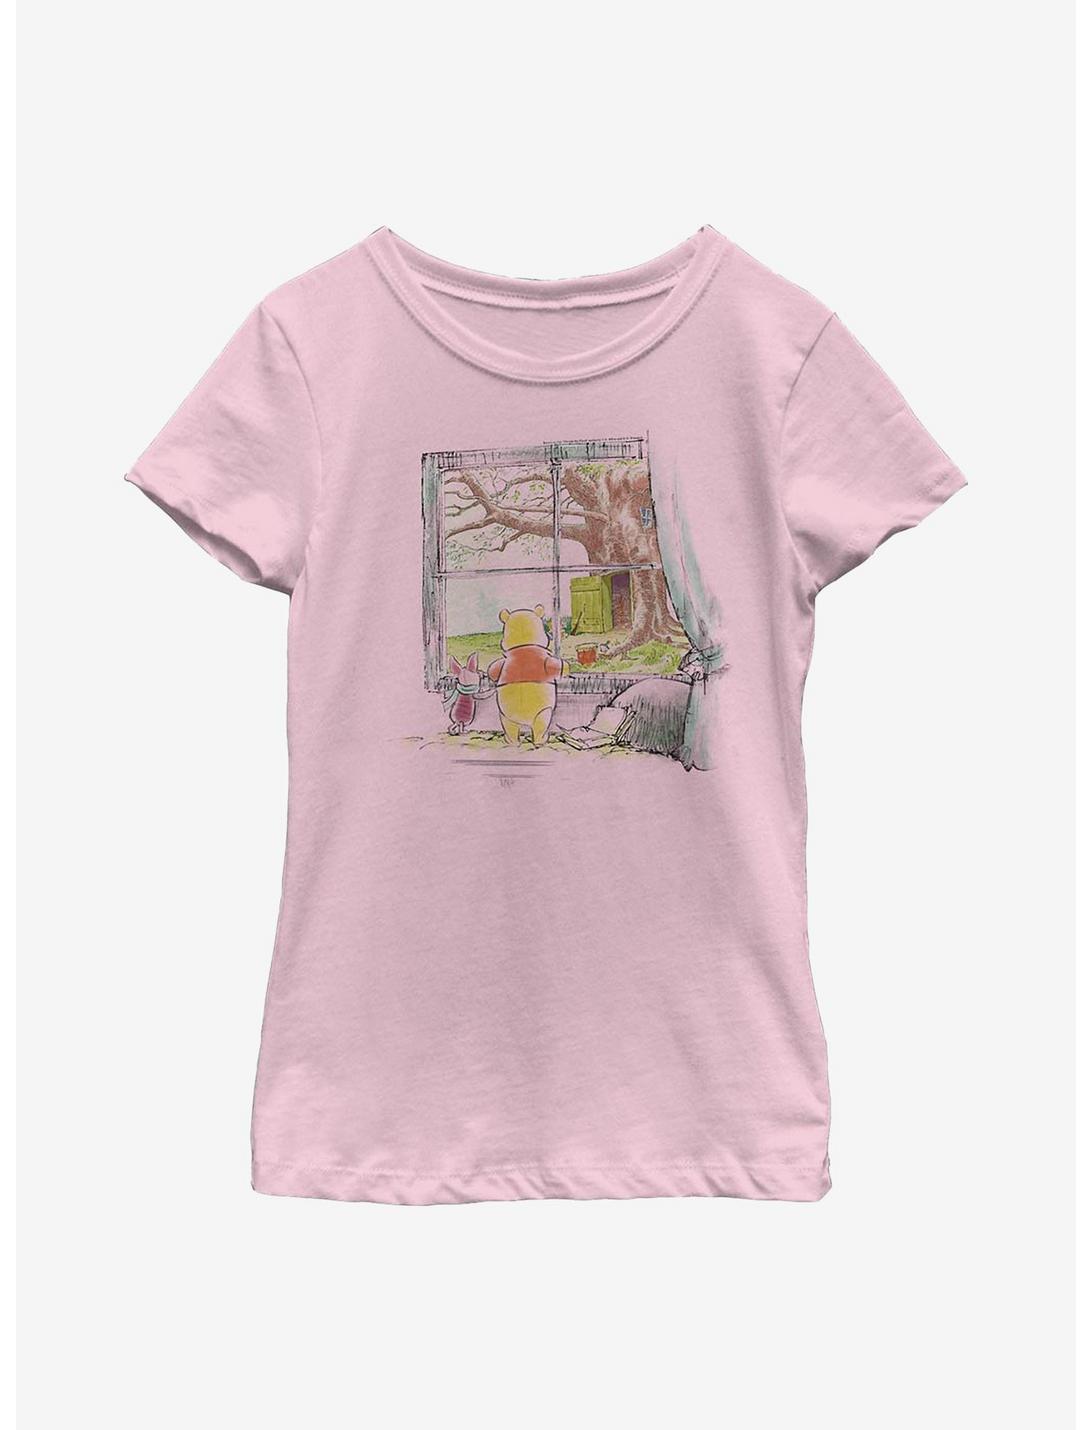 Disney Winnie The Pooh Window Youth Girls T-Shirt, PINK, hi-res